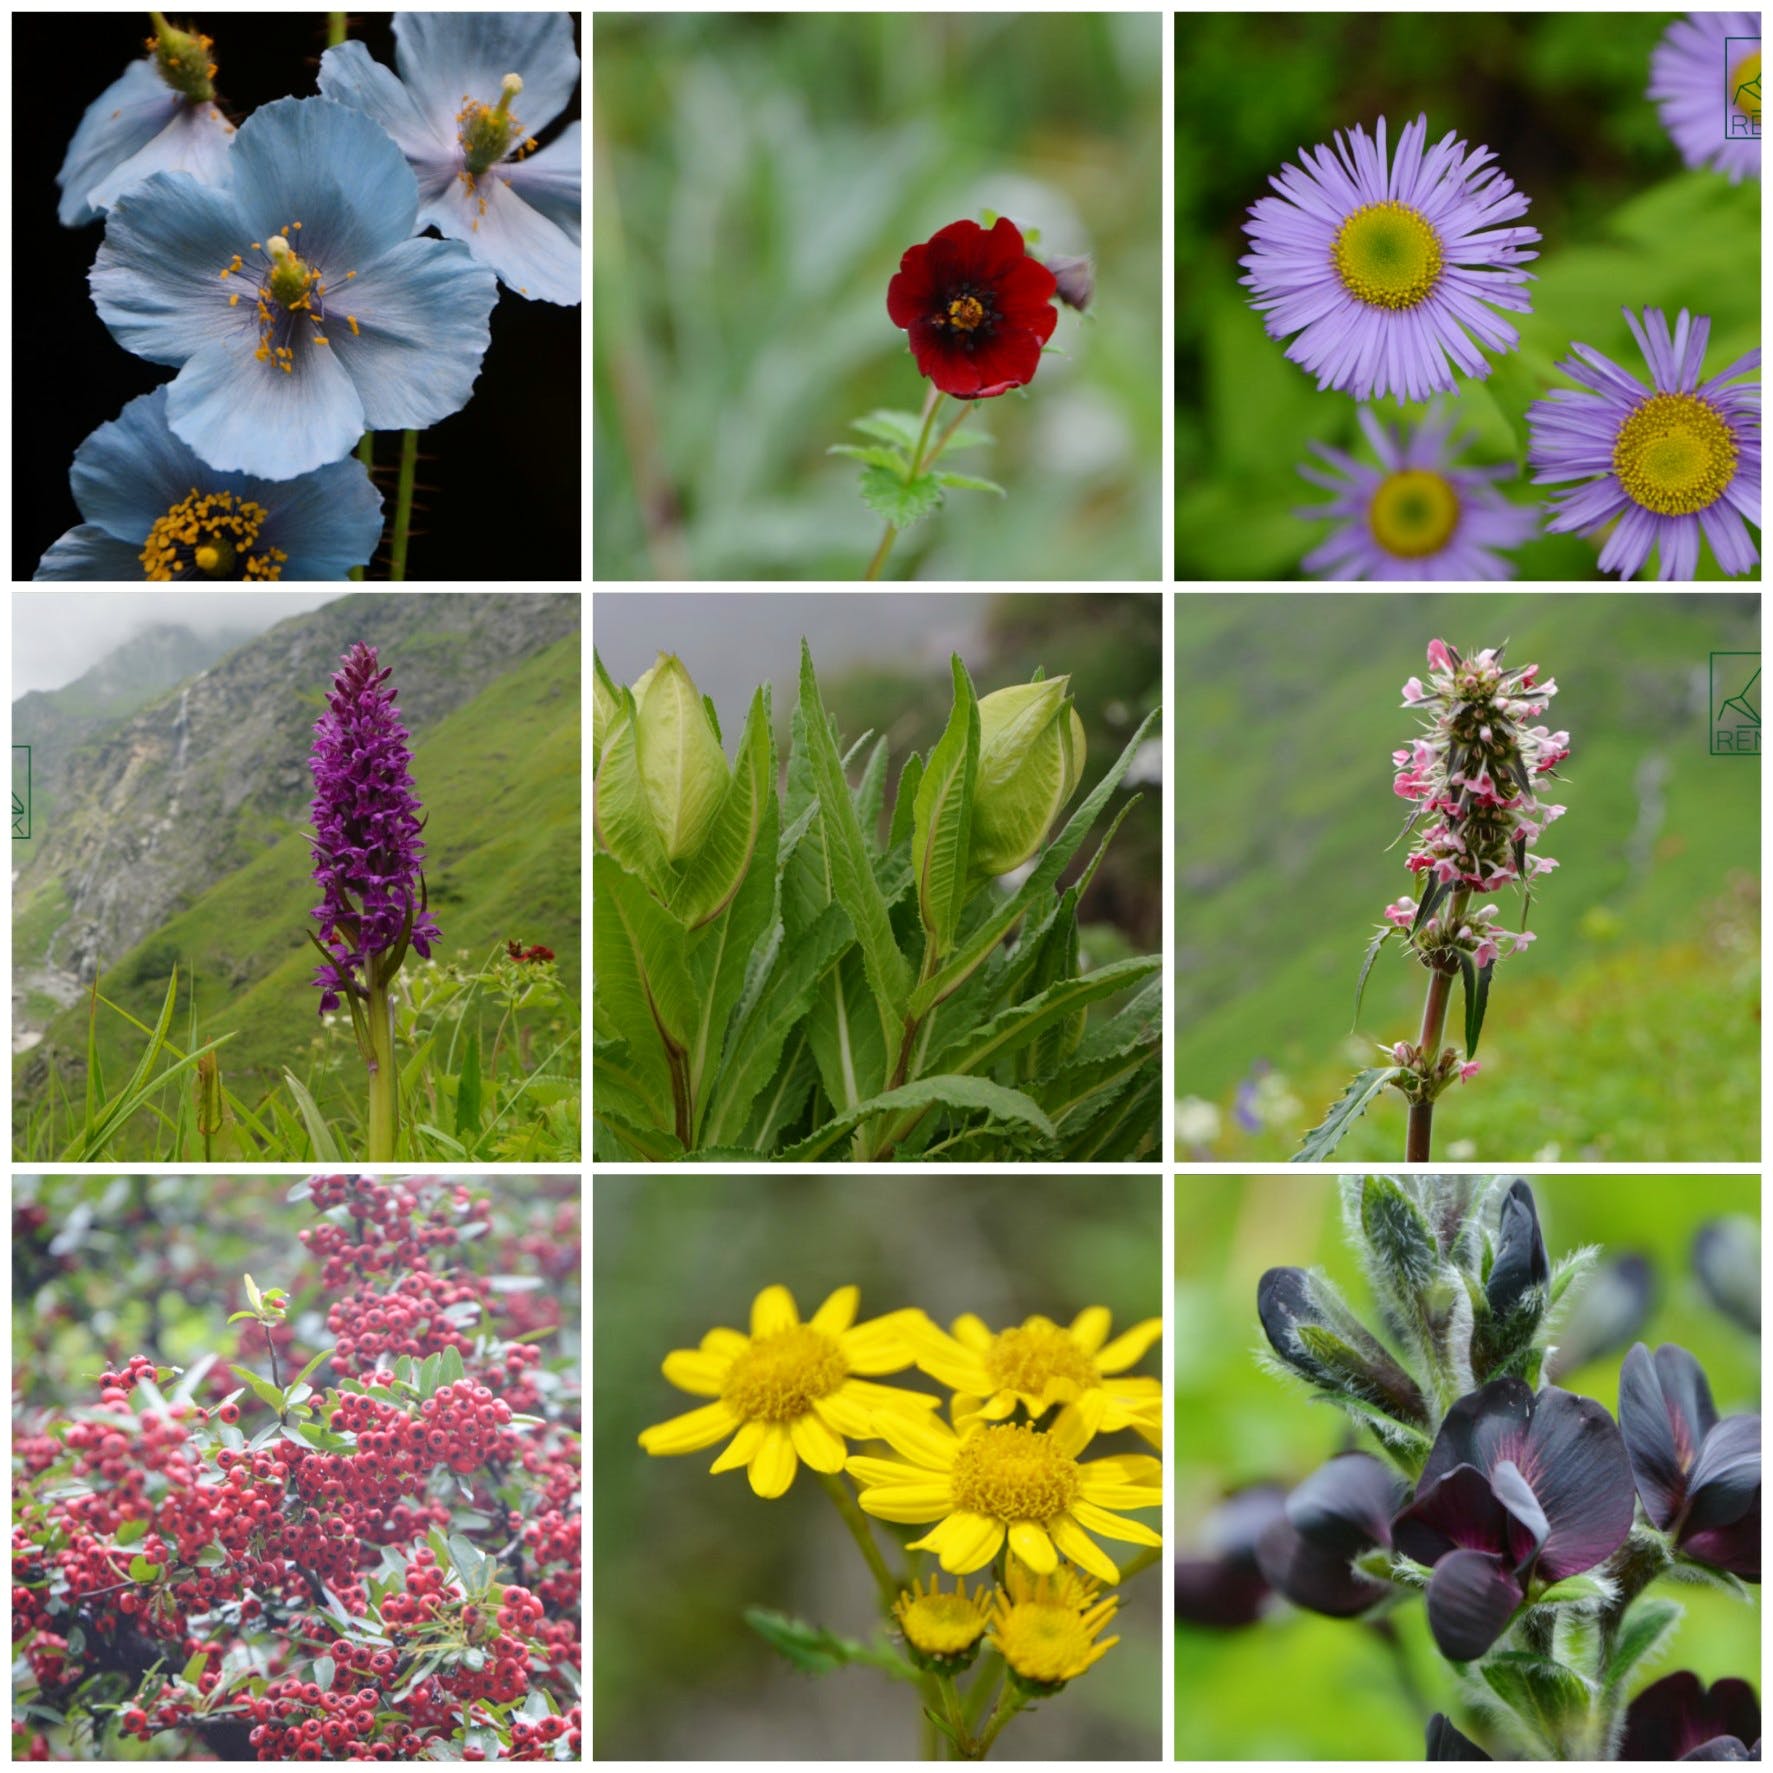 Flower,Flowering plant,Plant,Wildflower,Petal,Annual plant,Daisy family,Aster,Coneflower,black-eyed susan